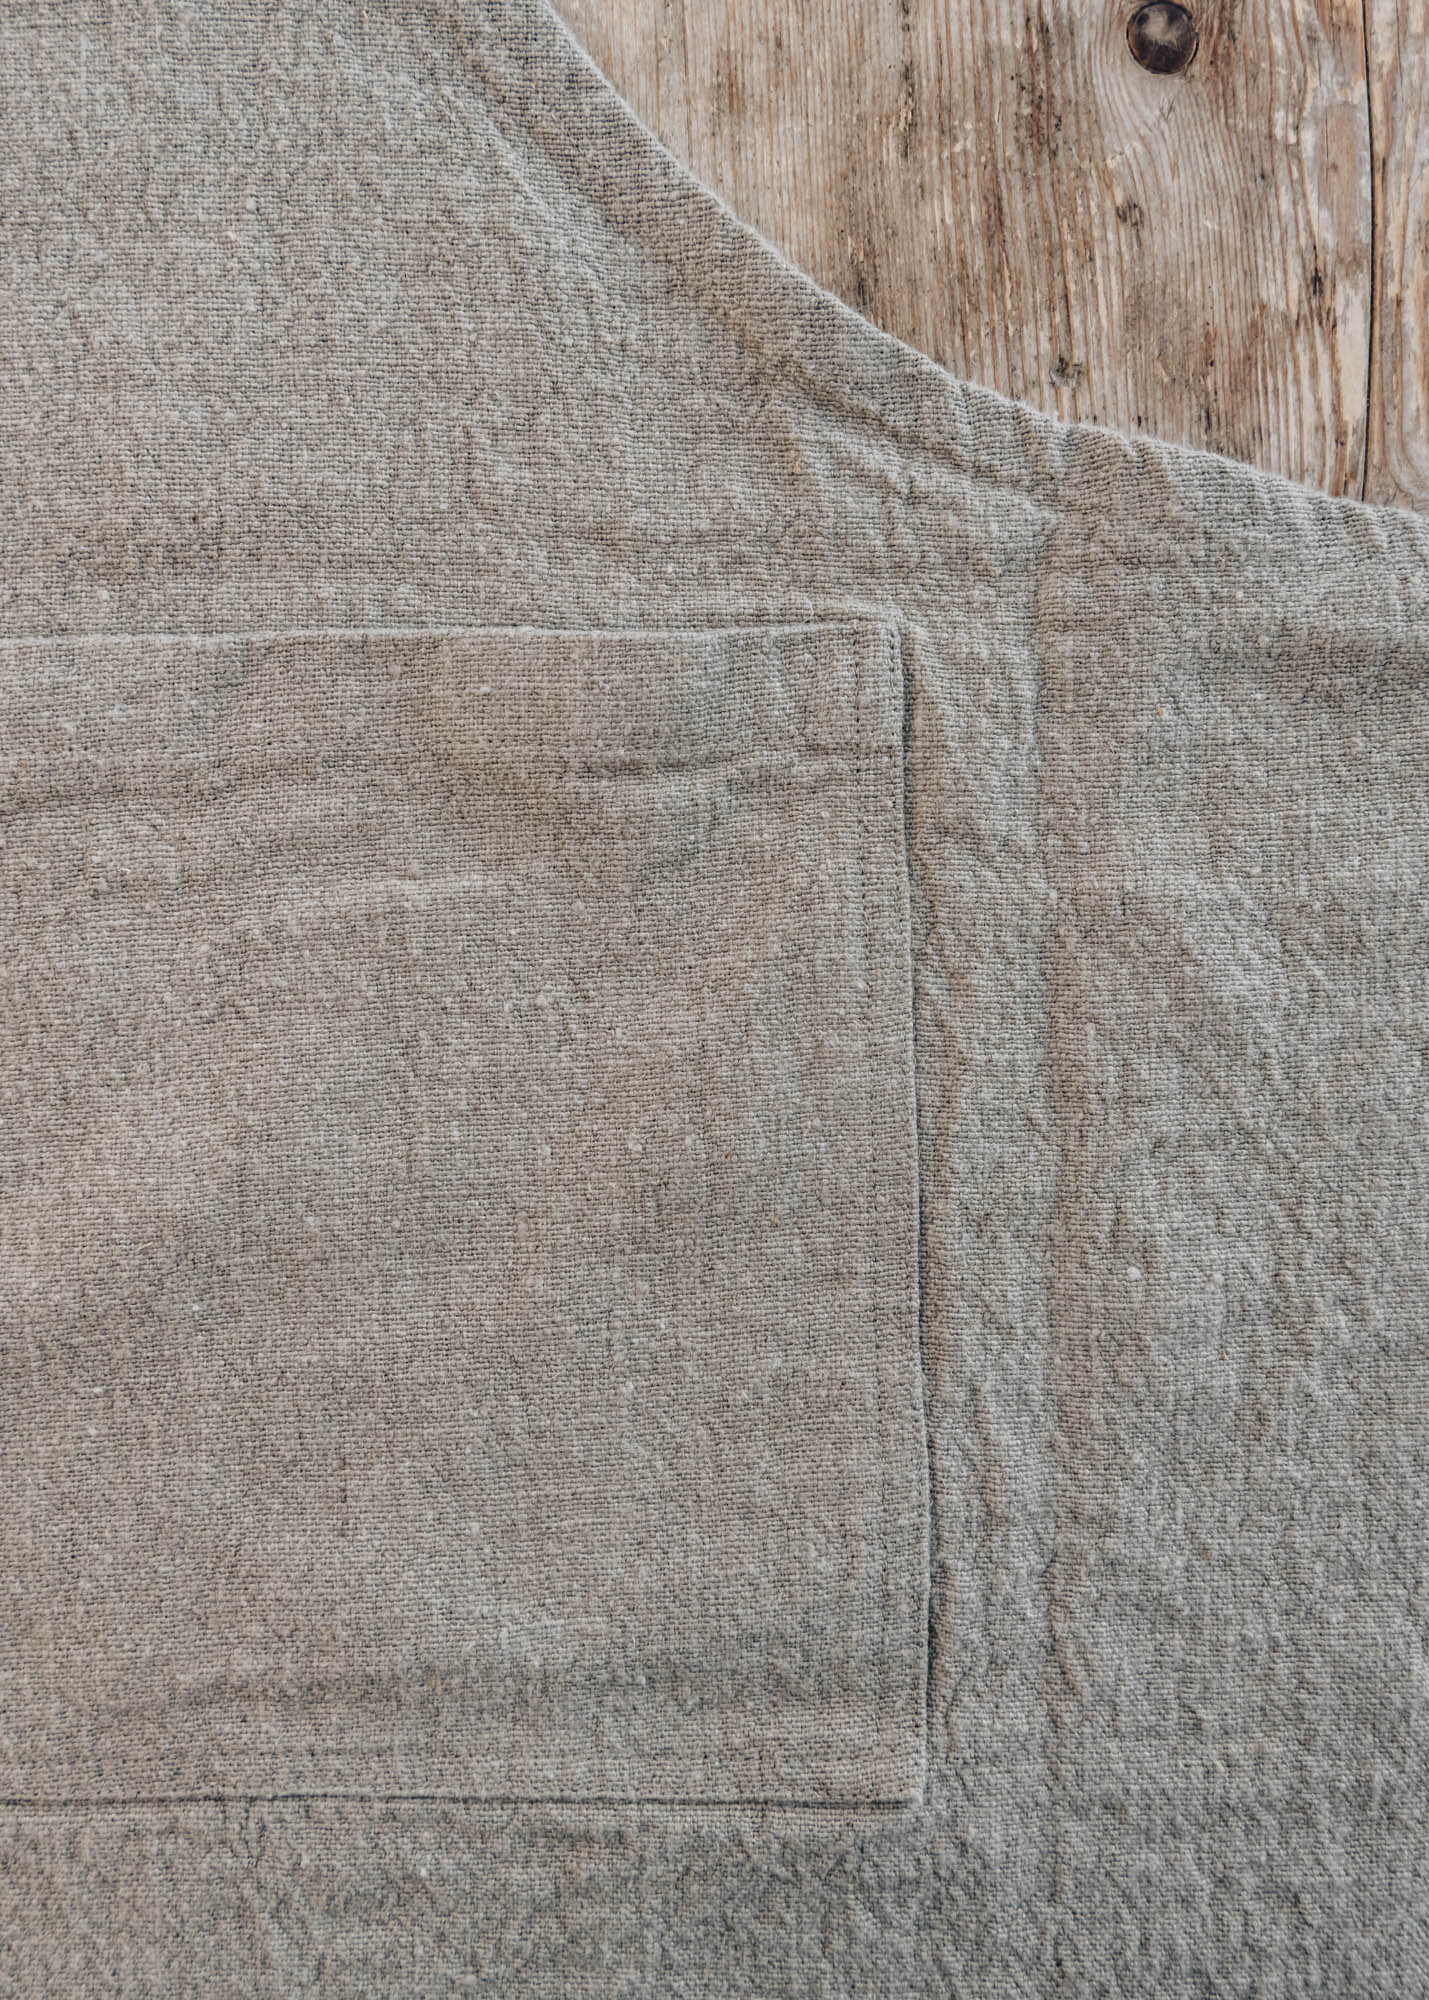 Textured Natural Linen Crossback Apron